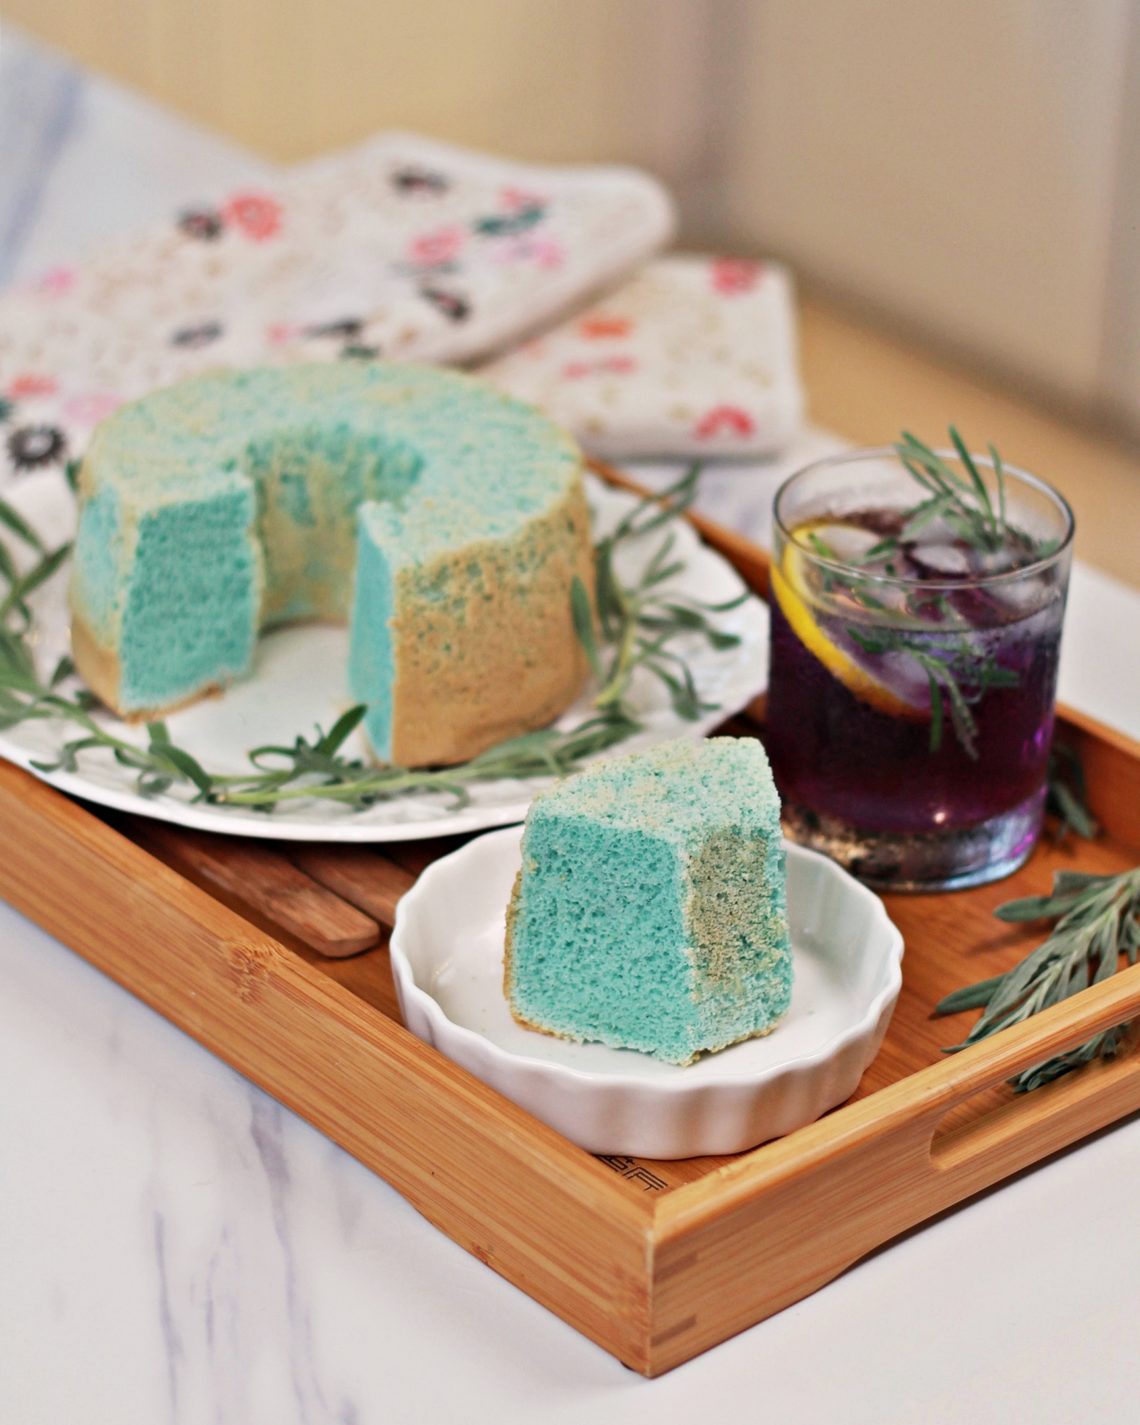 Butterfly Pea Flower Chiffon Cake – 蝶豆花戚风蛋糕